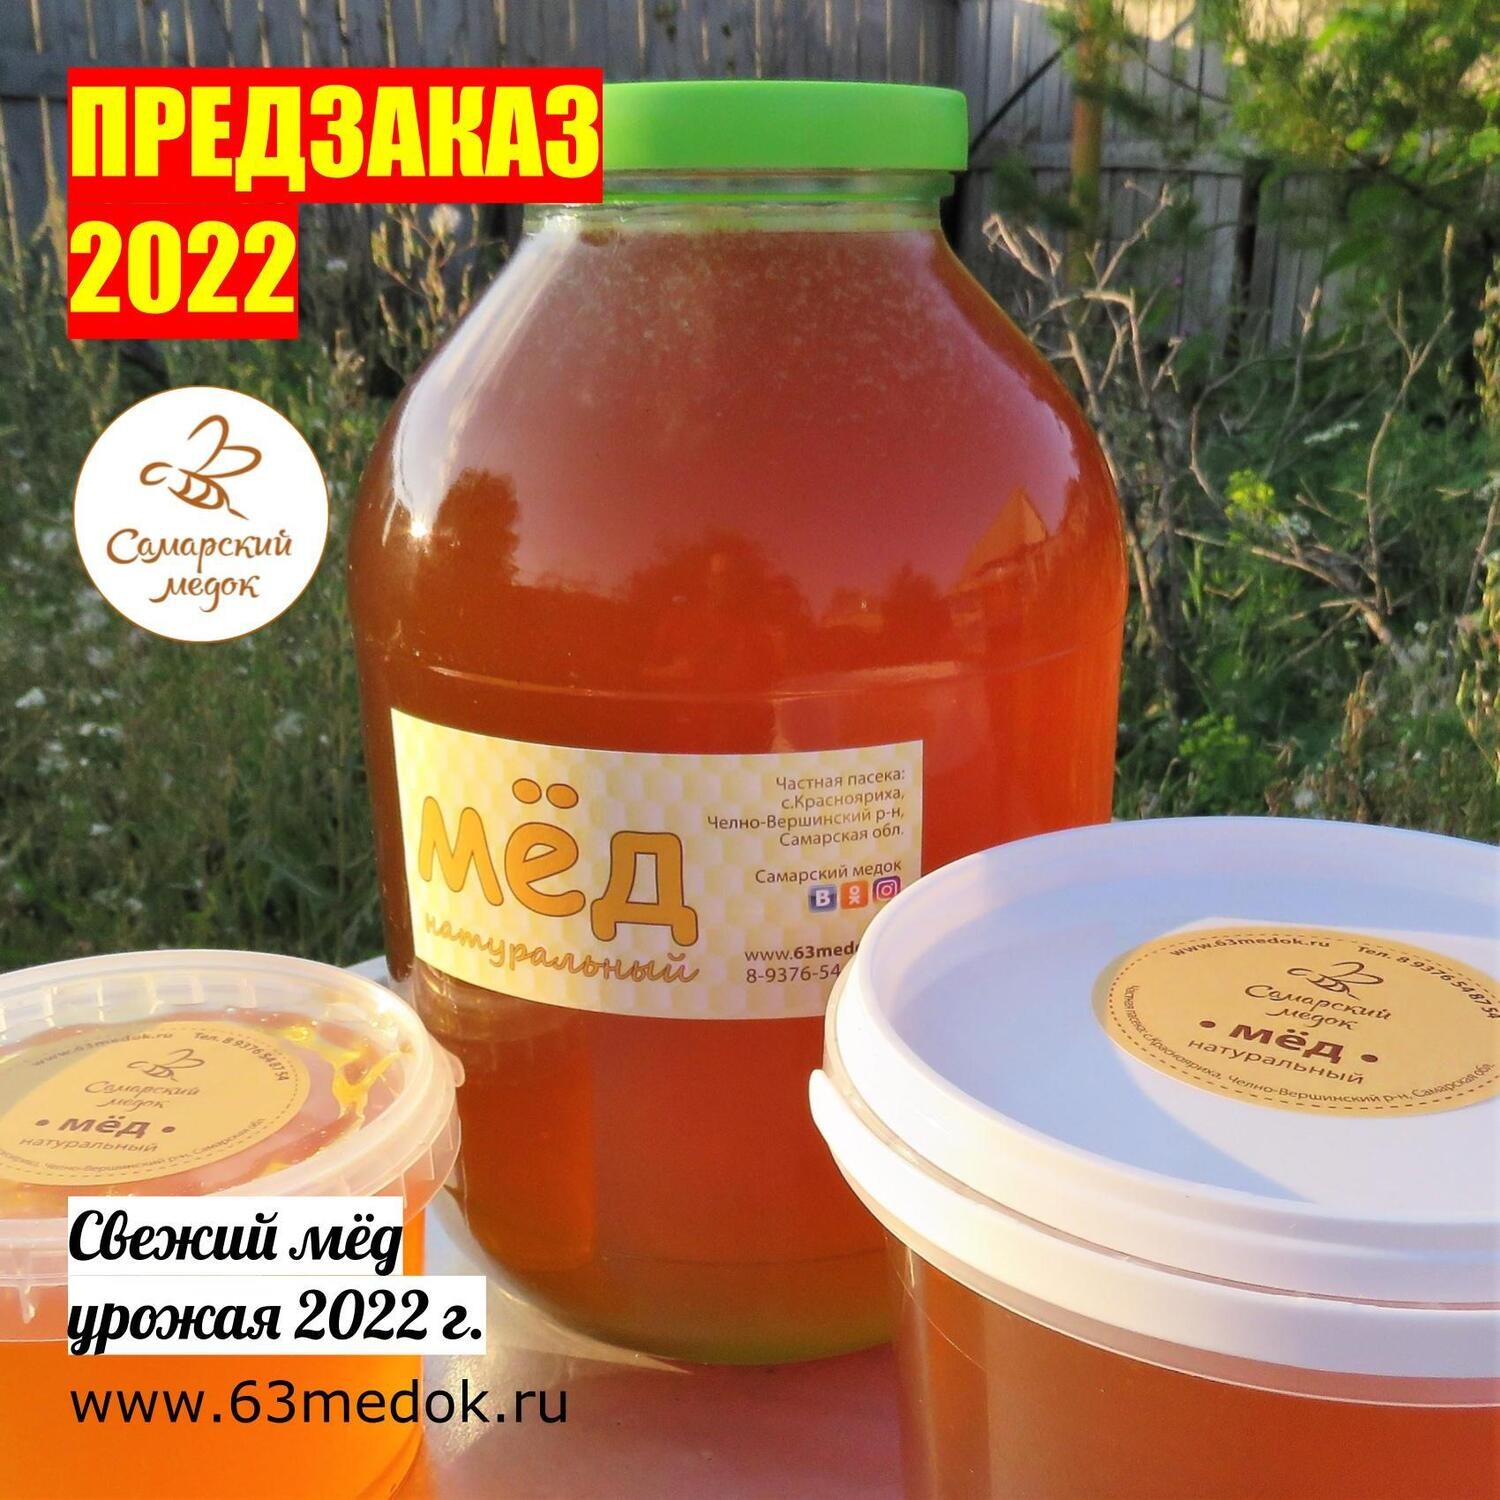 ПРЕДЗАКАЗ 2022 - Подсолнечный свежий мёд 3 л.